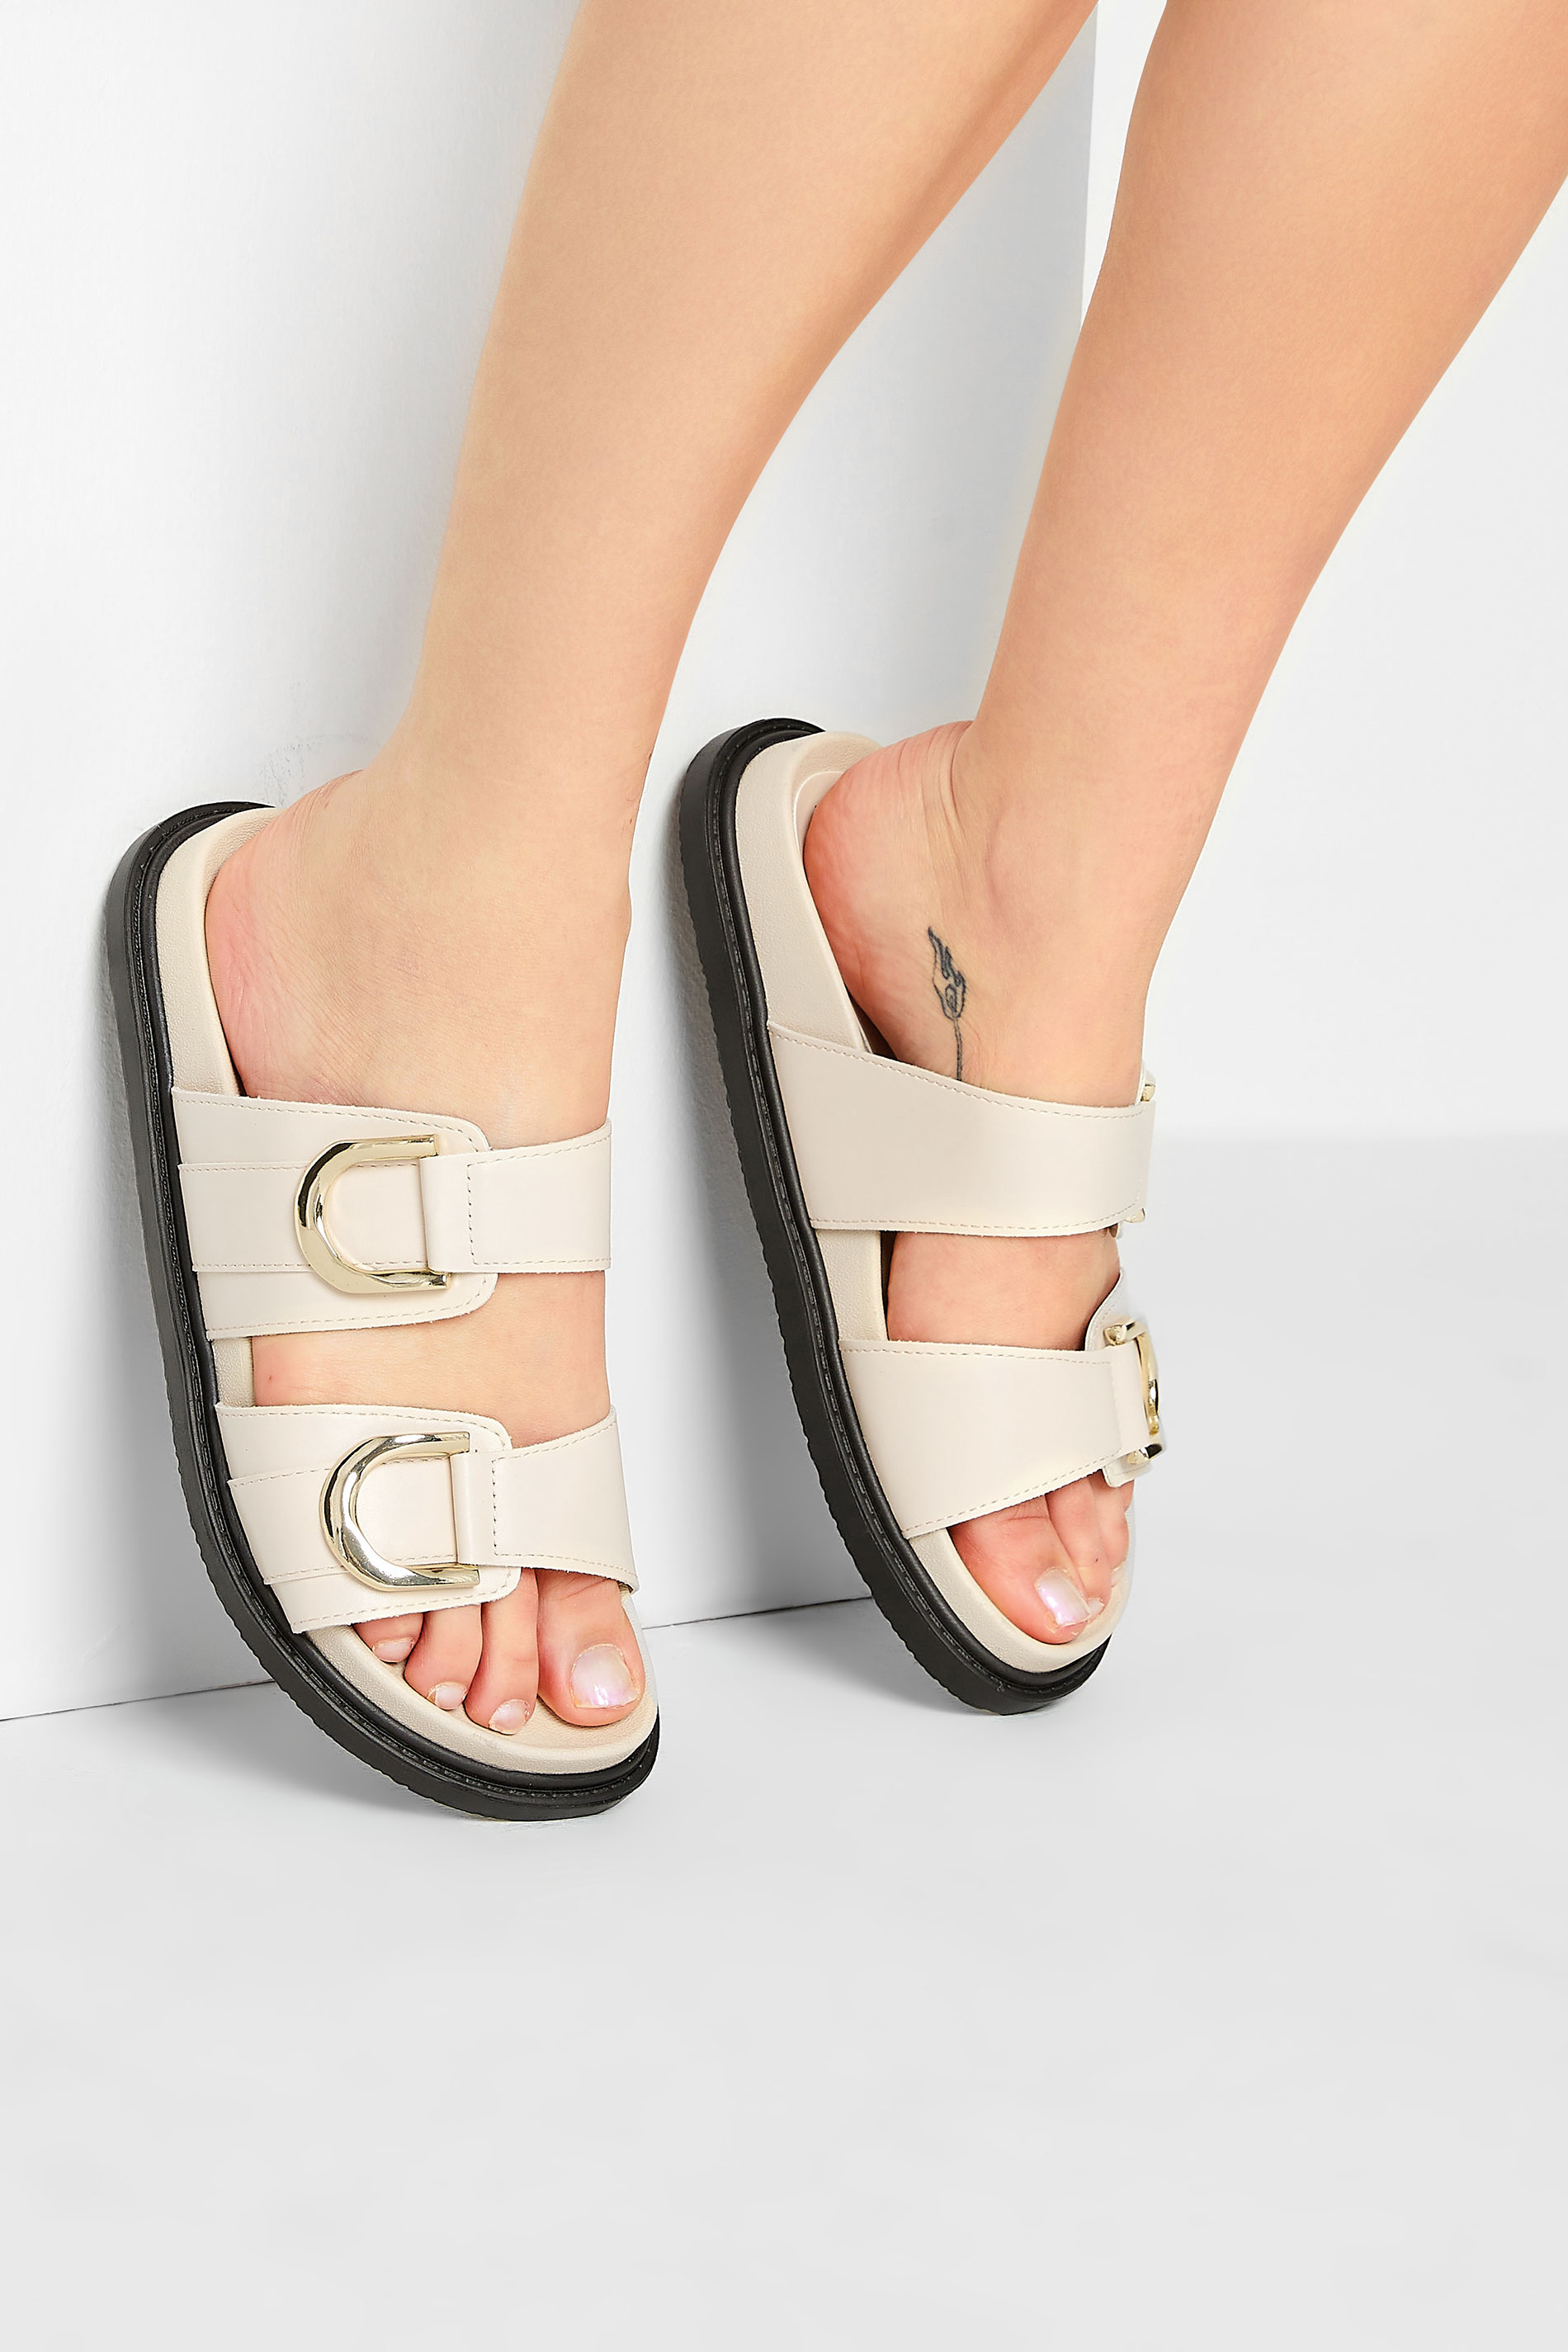 PixieGirl Cream Buckle Strap Sandals In Standard D Fit | PixieGirl  1